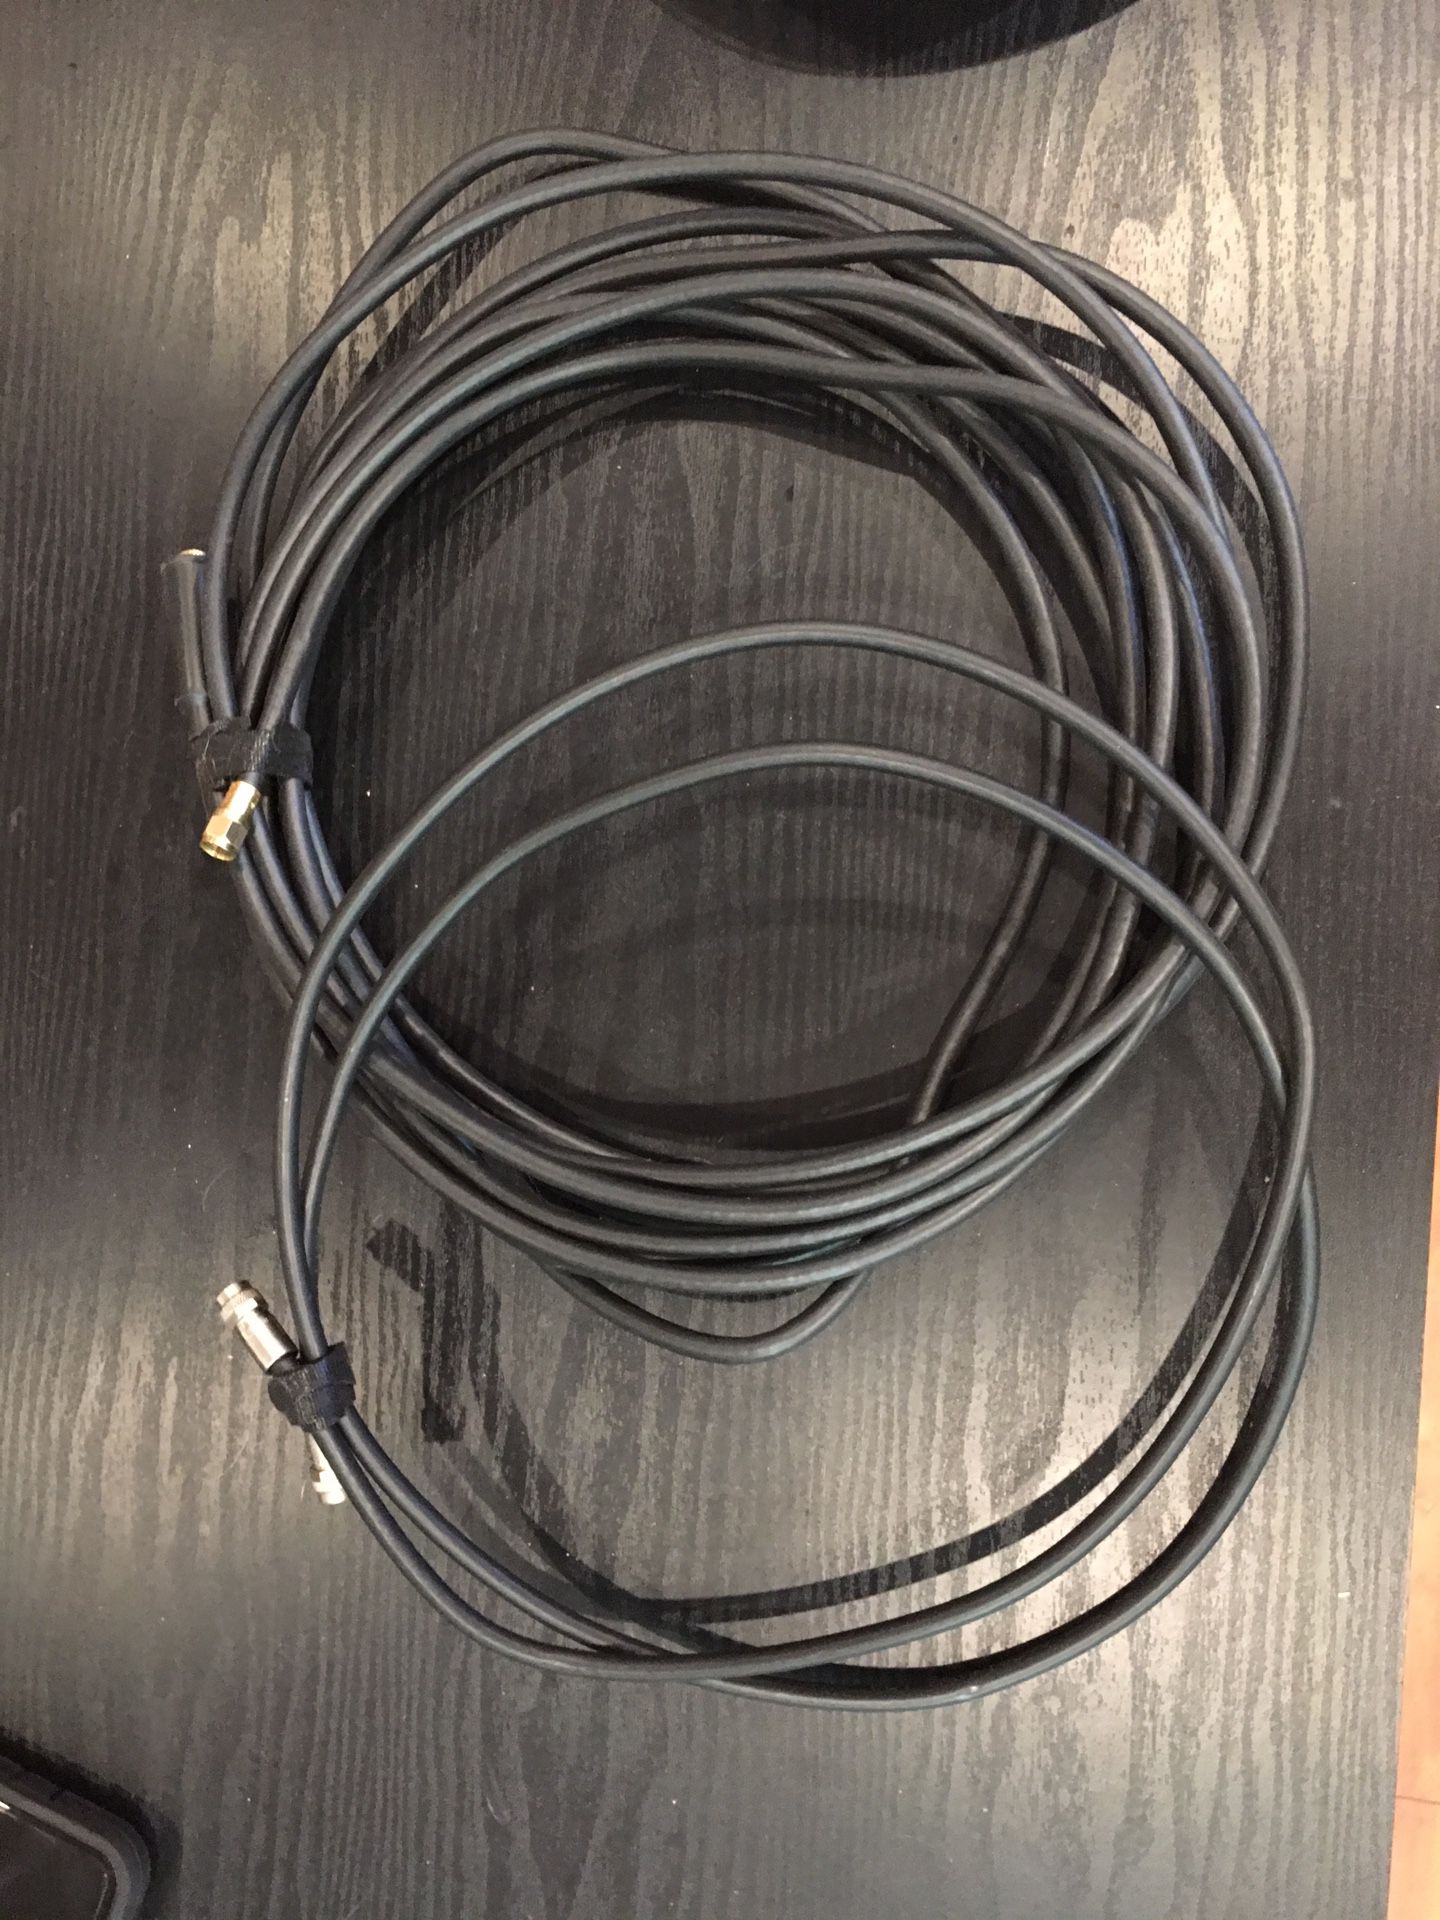 Coaxial cables - $5